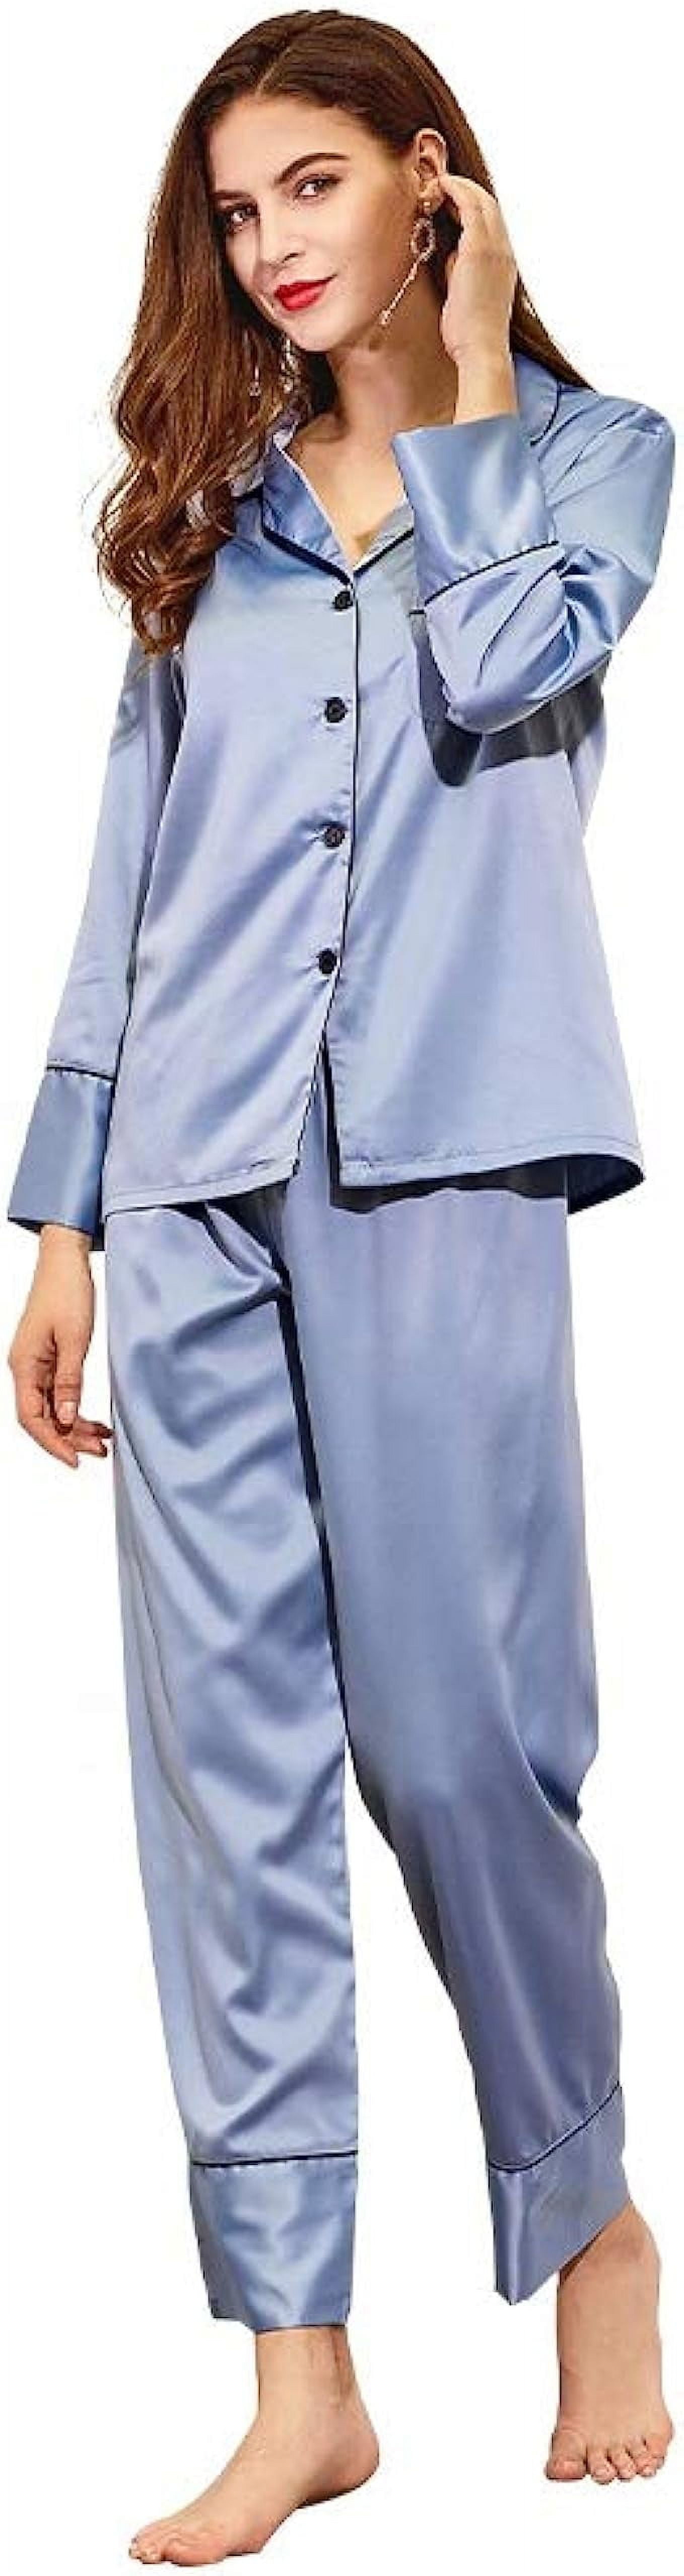 Crescentt Women's Satin Silk Pajamas Loungewear Sleepwear Set - Two ...